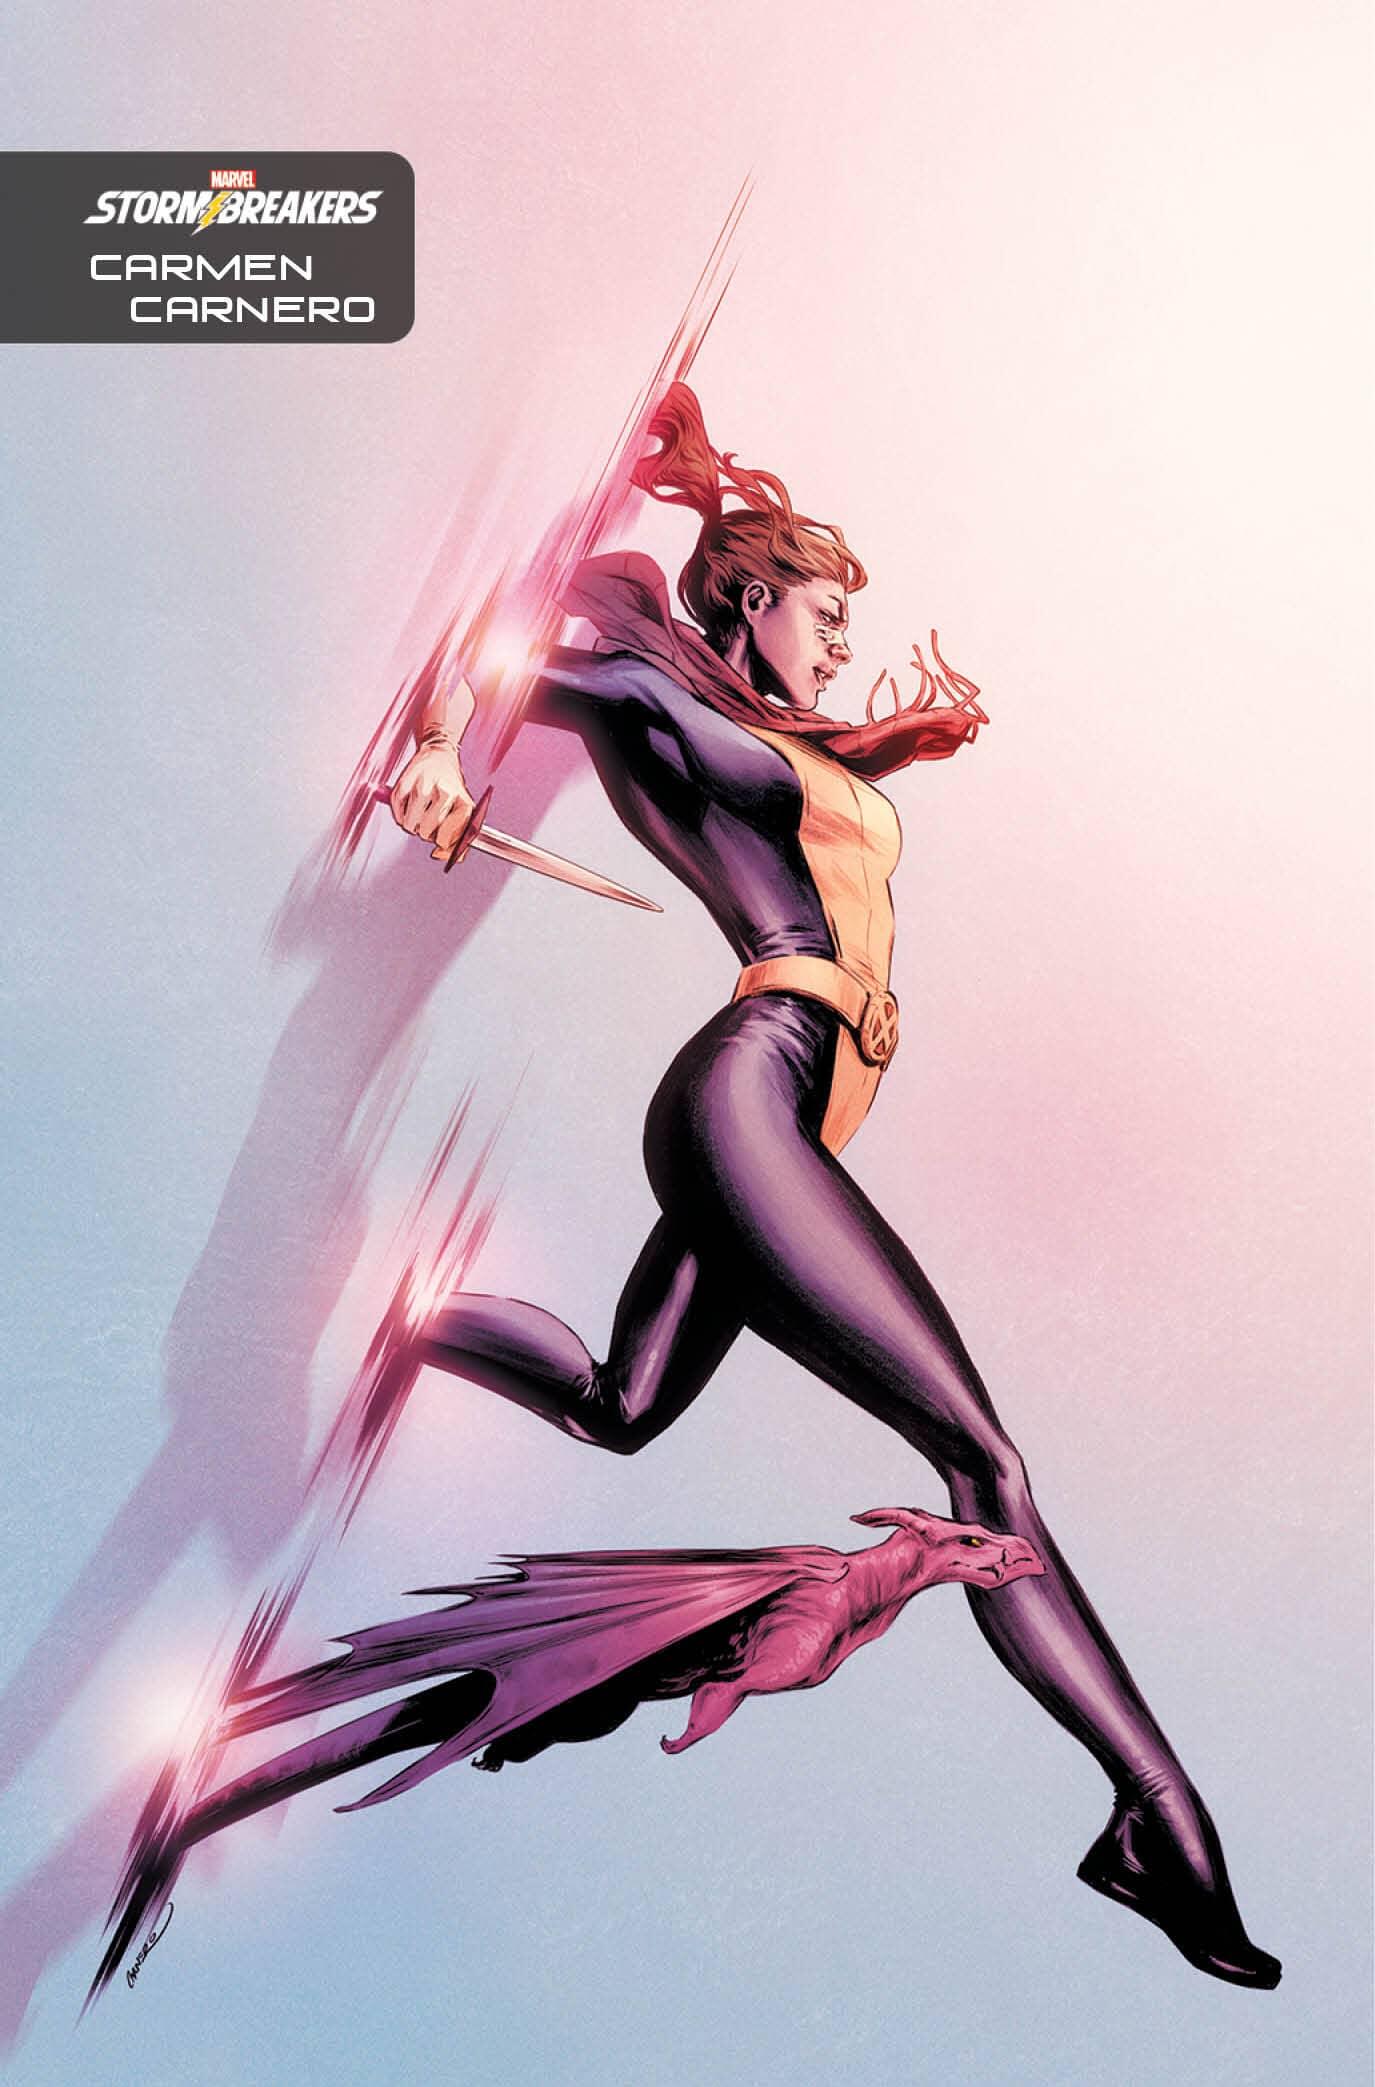 X-Men #15 Stormbreakers variant cover by Carmen Carnero